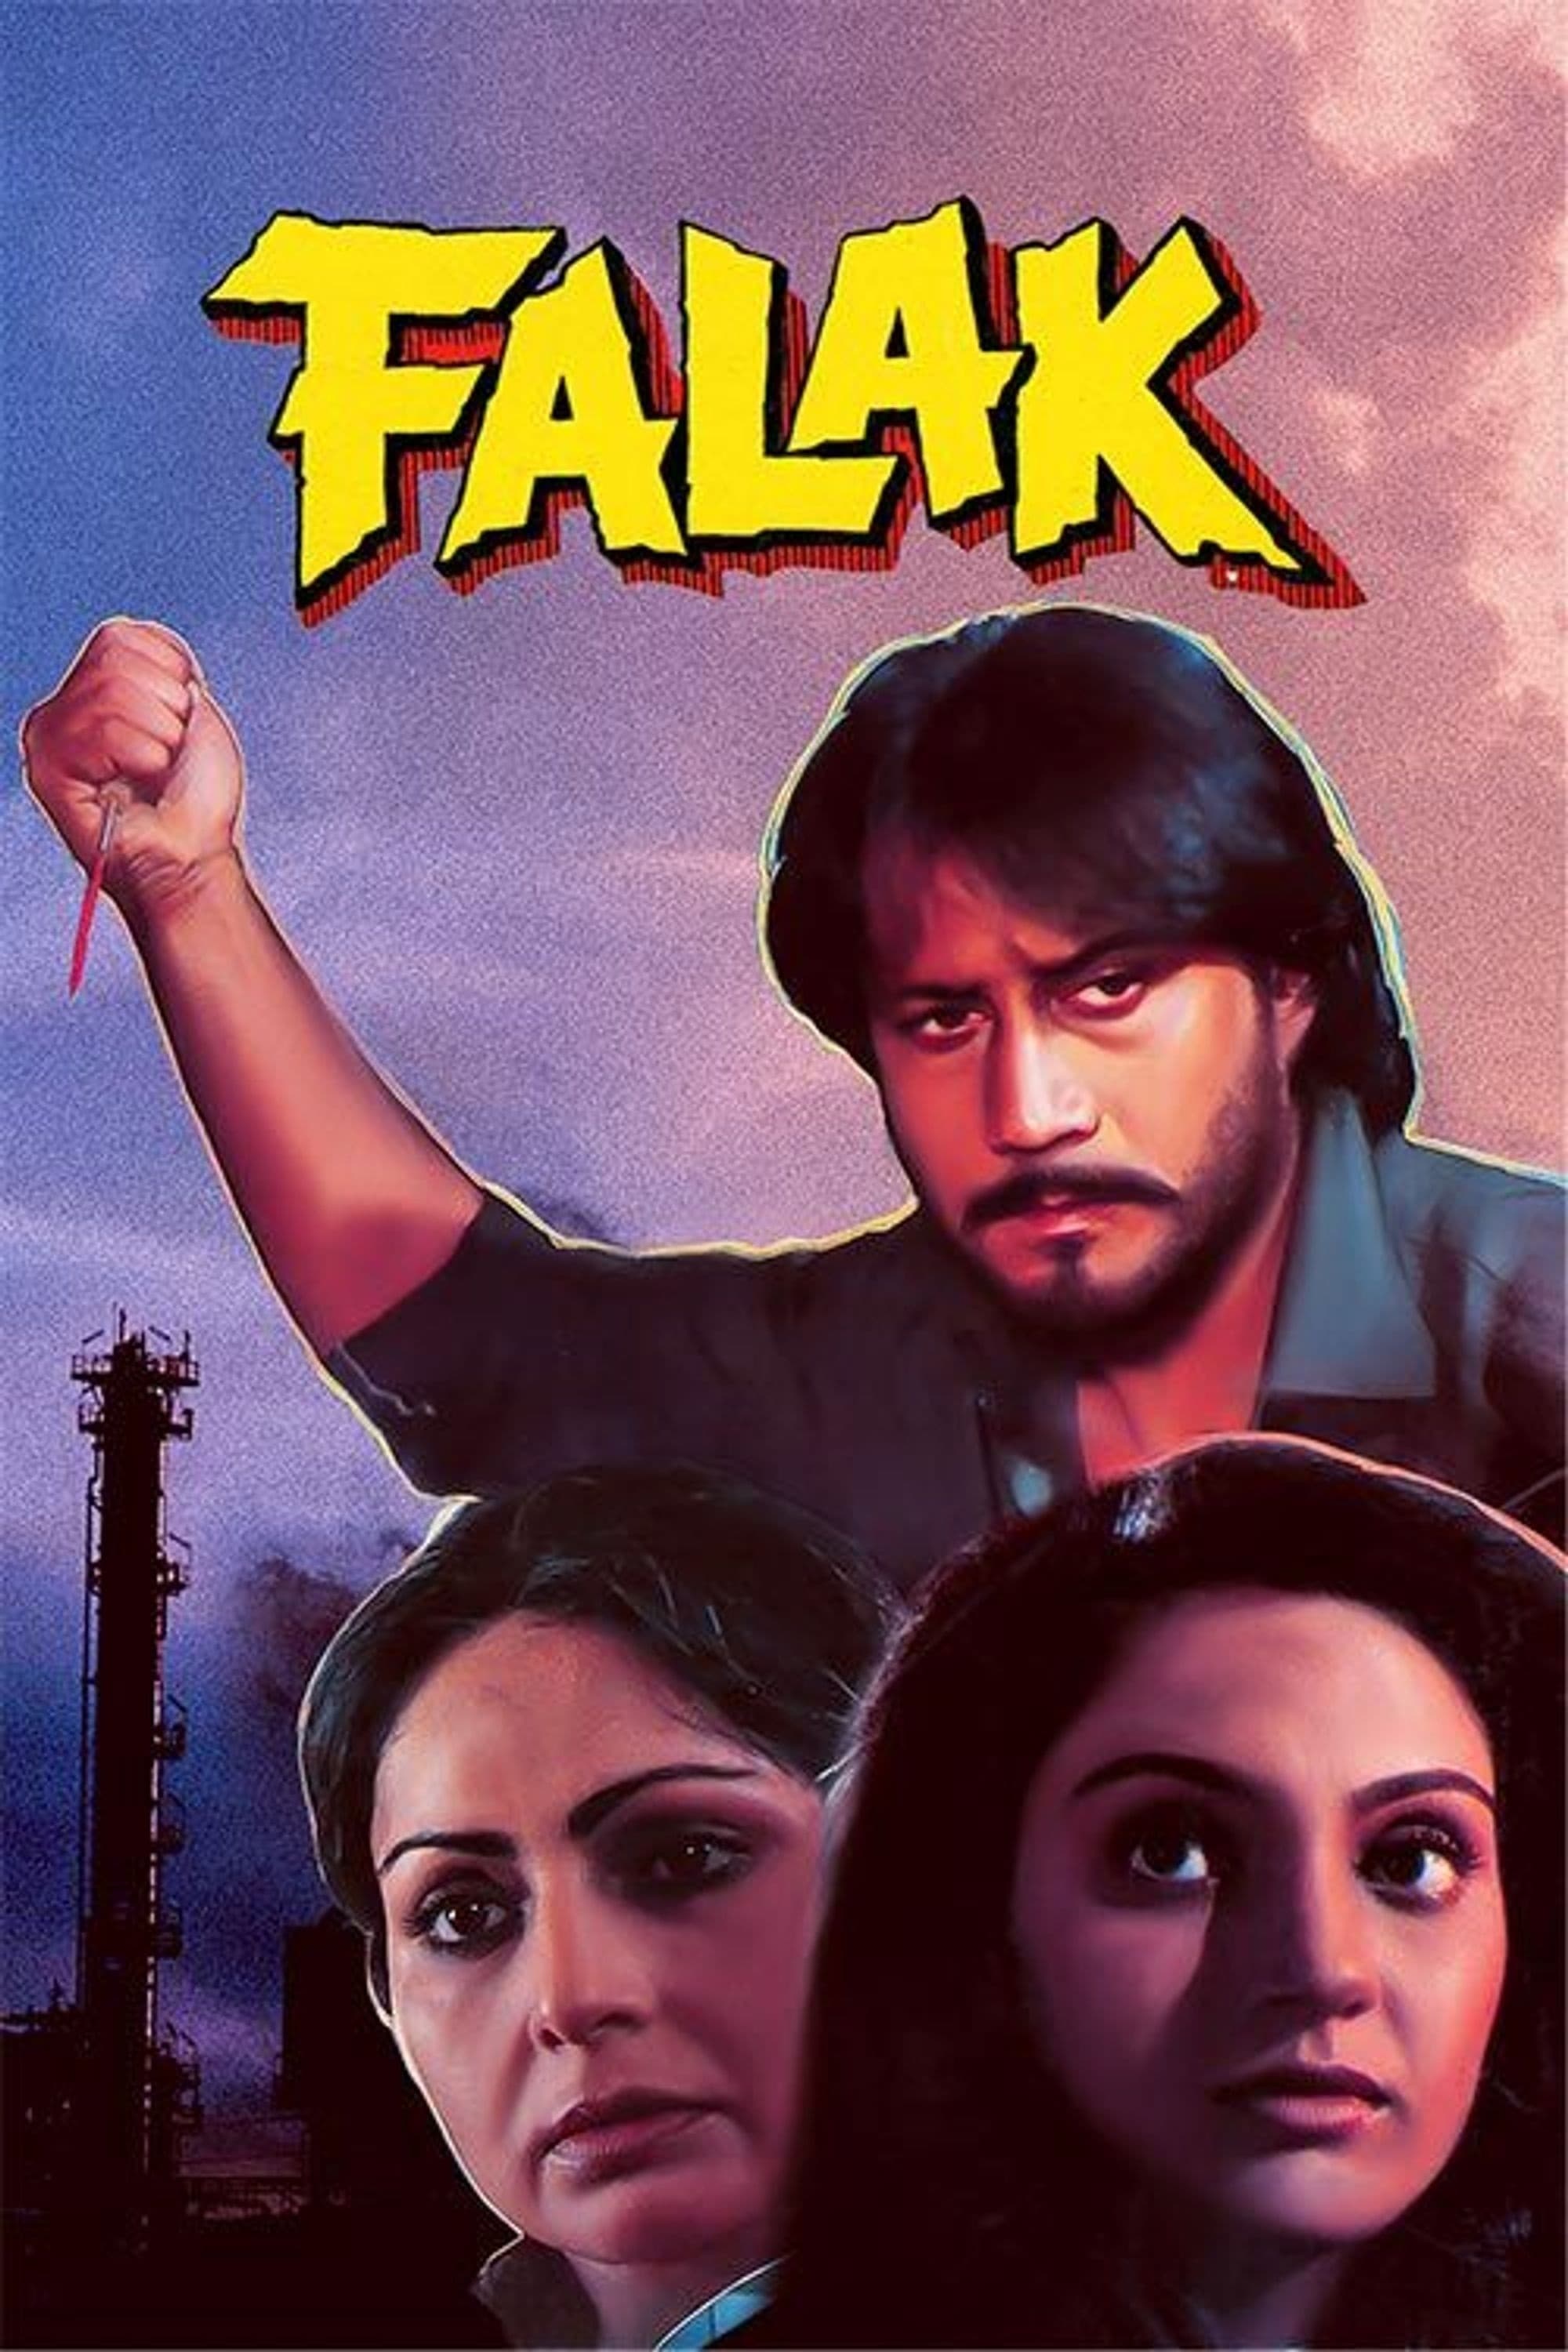 Falak (1988)